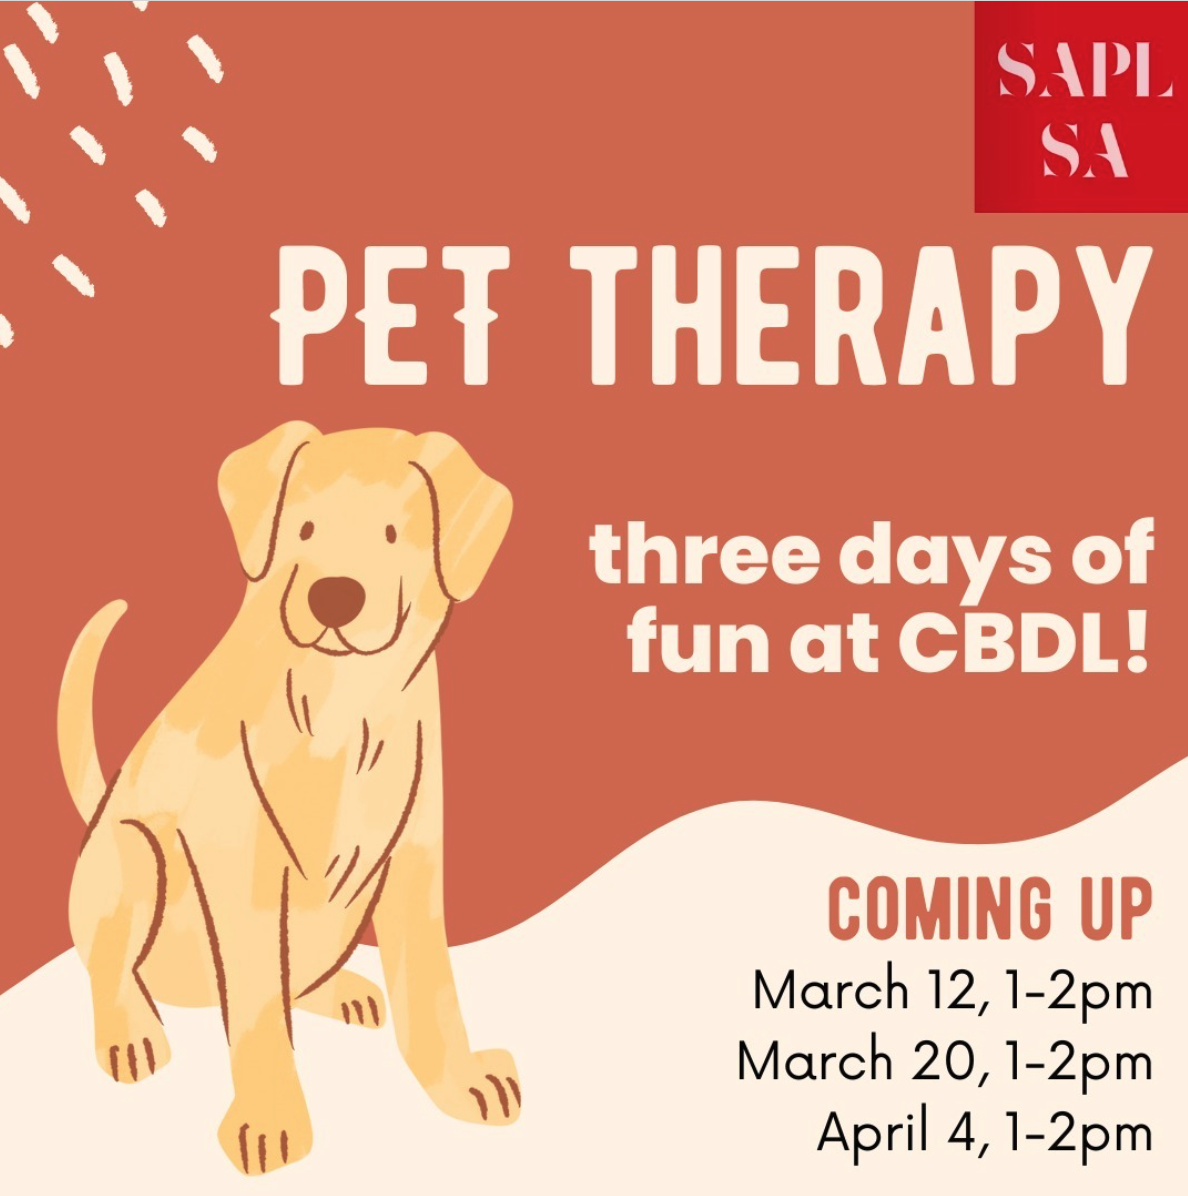 SAPLSA Pet therapy